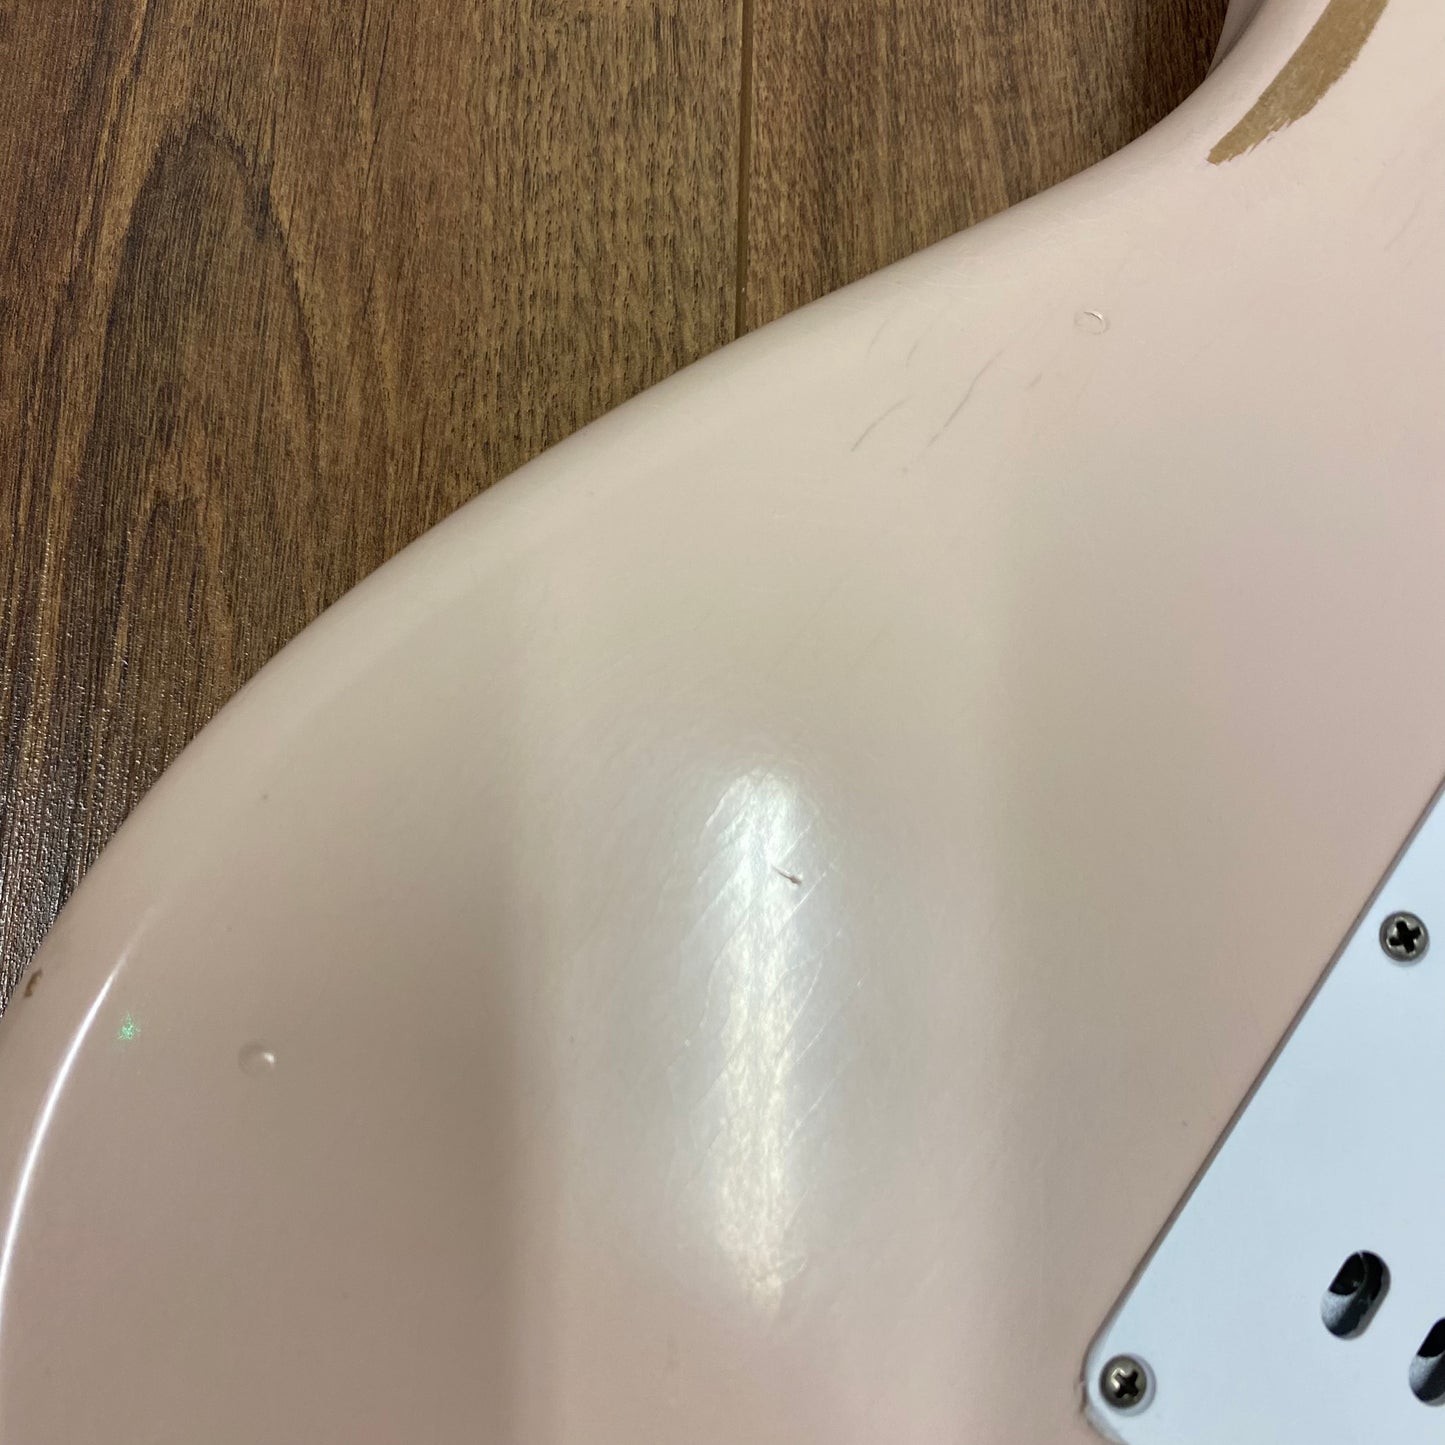 Pre-Owned Fender FSR Vintera Road Worn '60s Stratocaster - Shell Pink